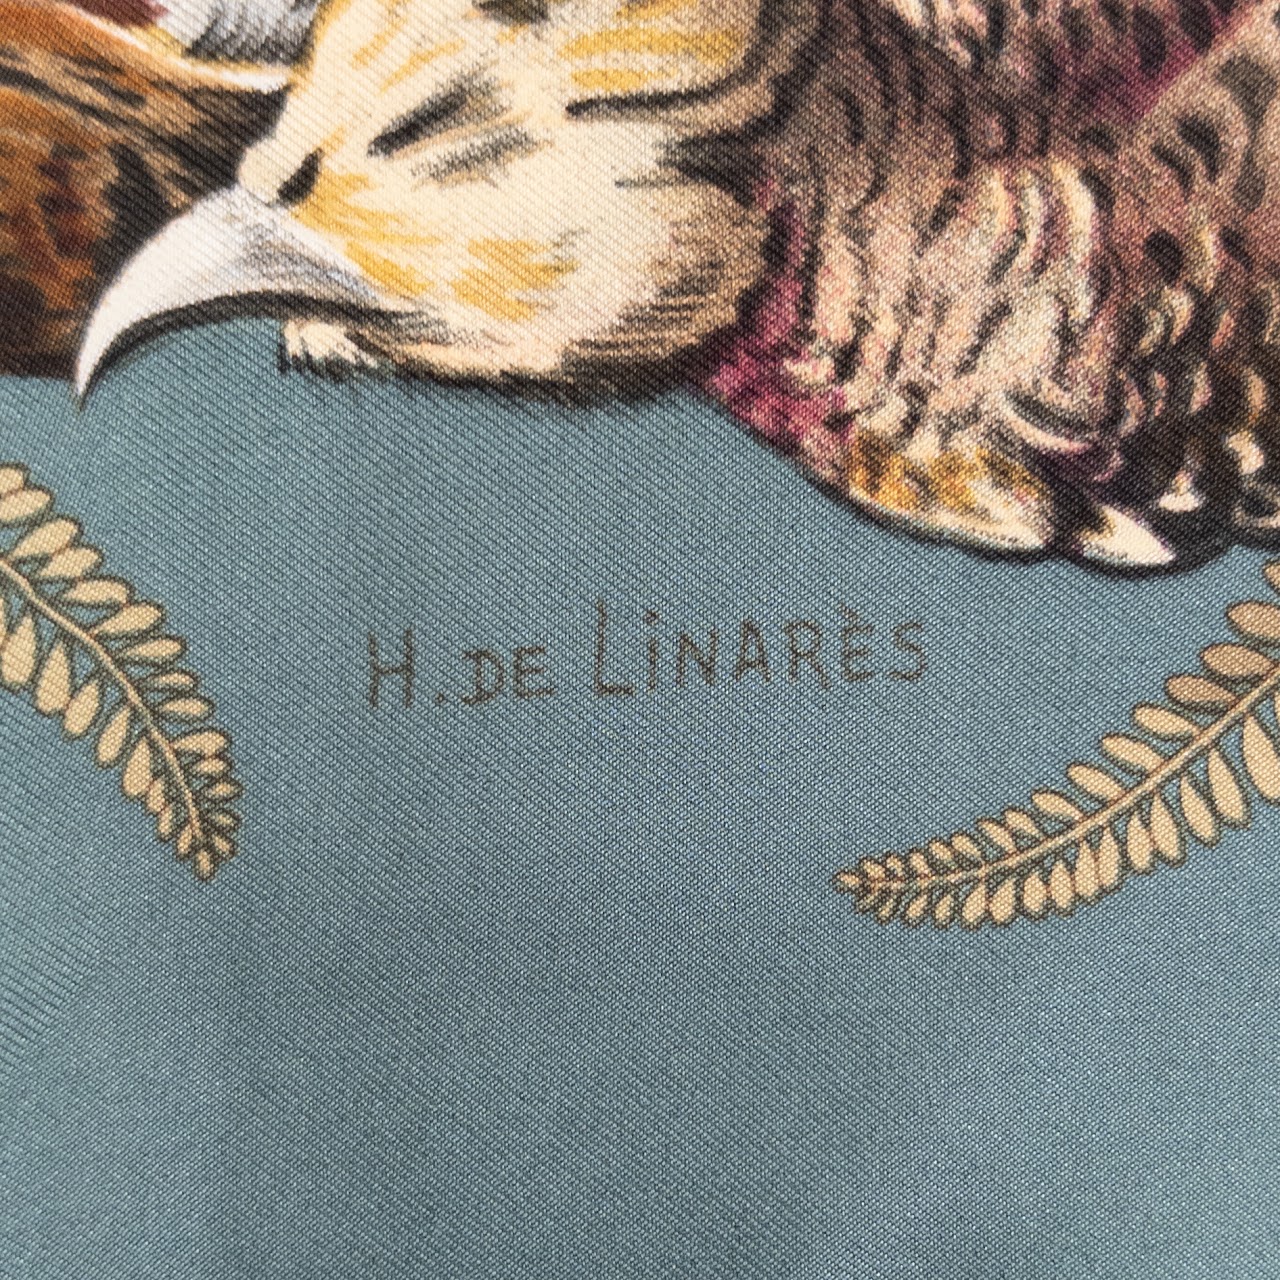 Hermès Jorge Ruiz Linares 'Gibiers' Scarf 90